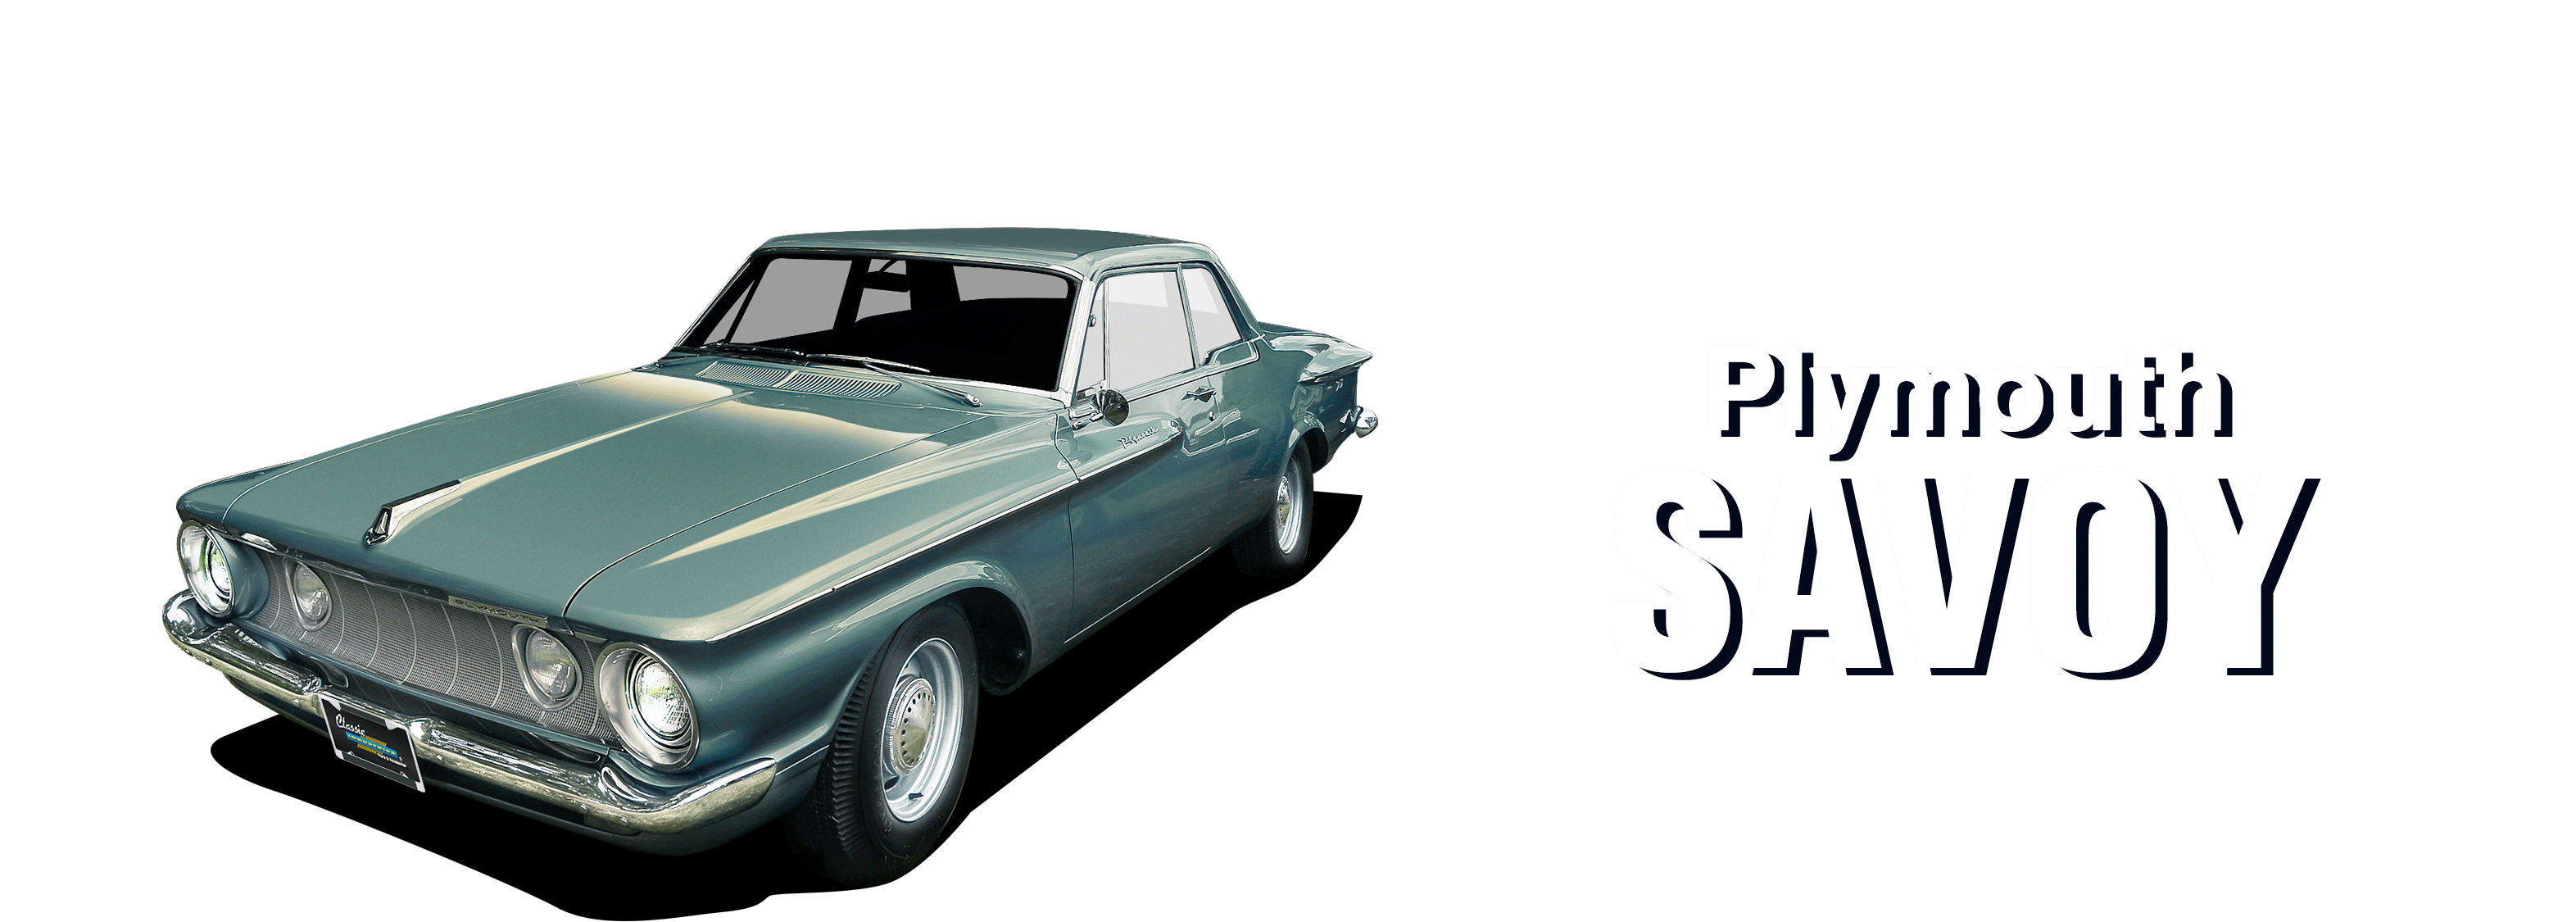 Plymouth-Savoy-vehicle-desktop-1